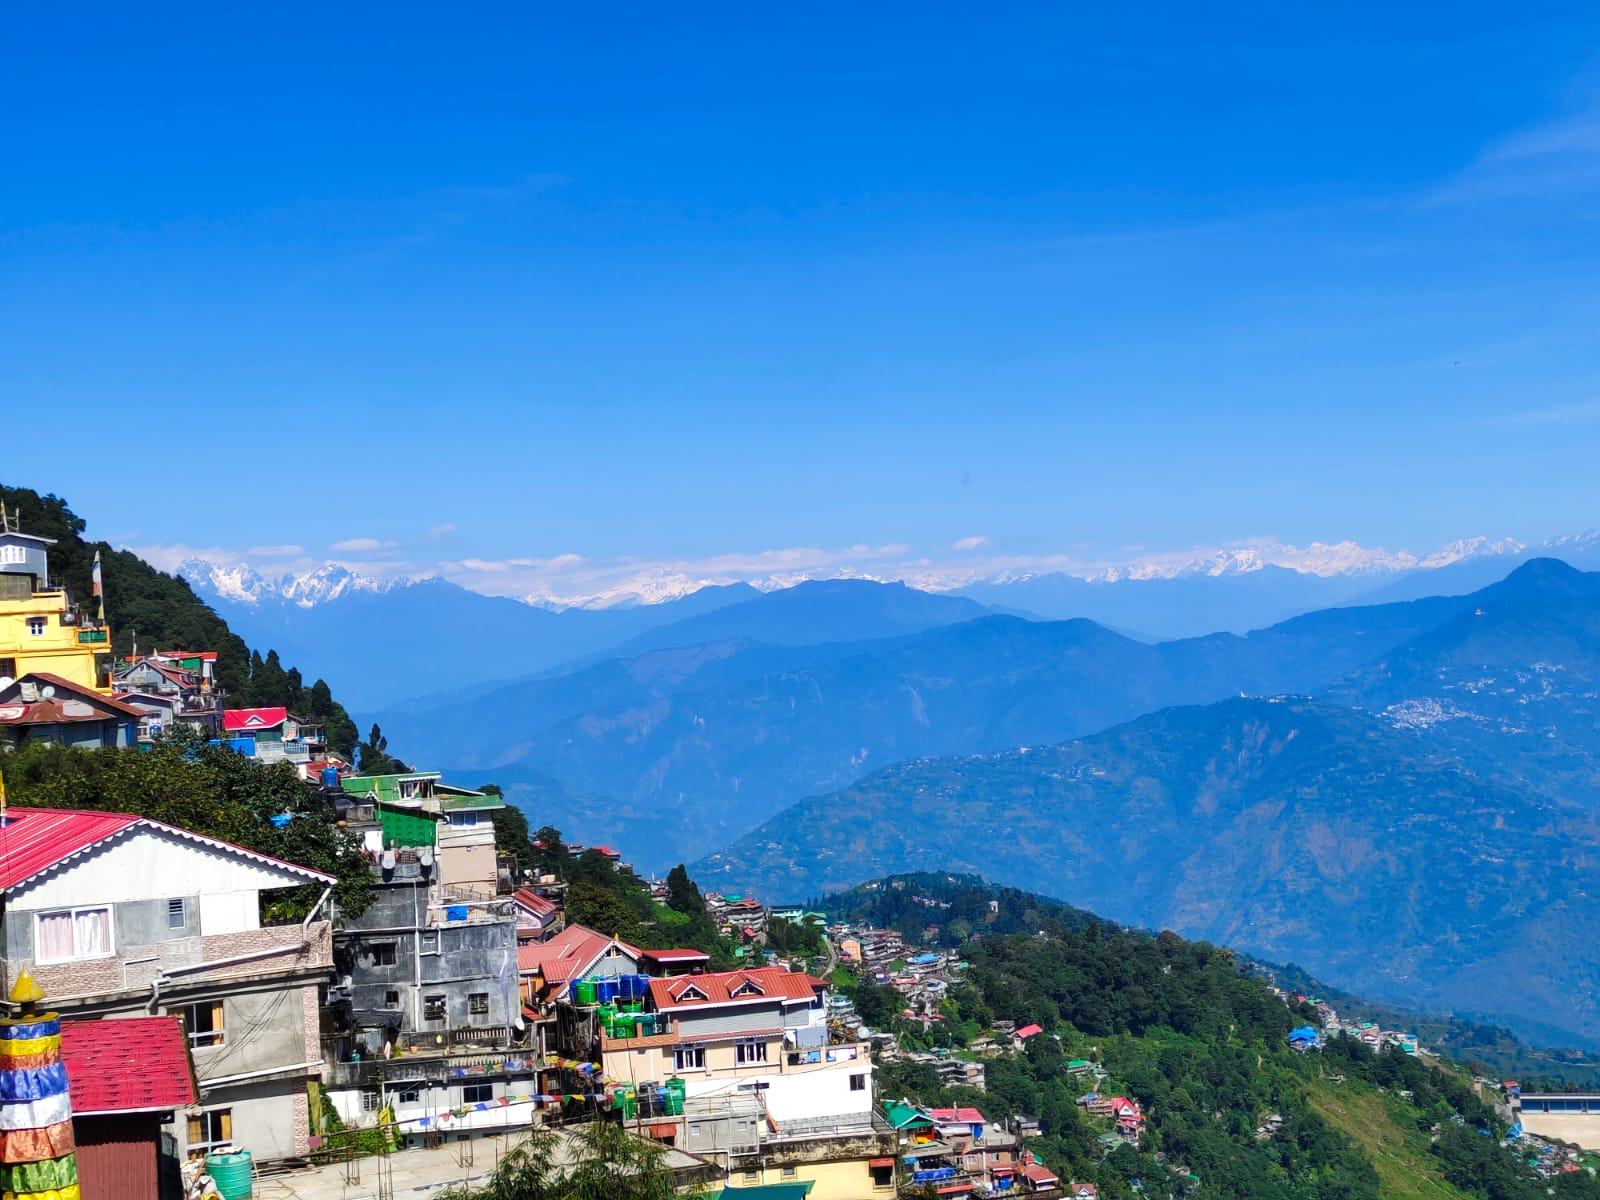 hotels in darjeeling near mall with mountain views
